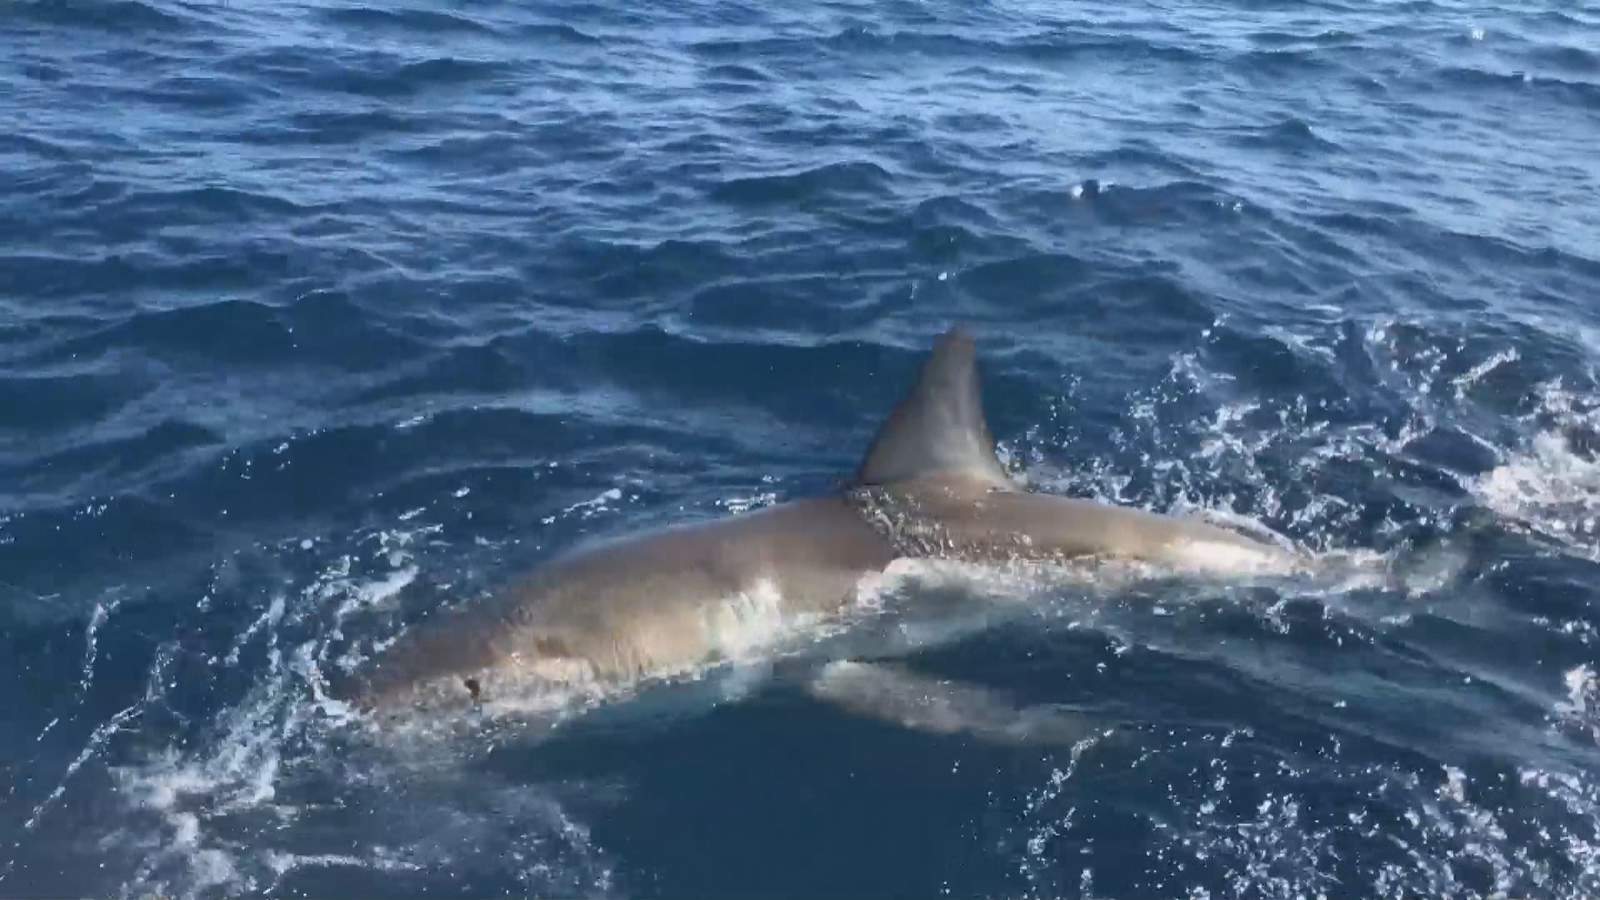 1,400 pounds of shark fins seized at Florida port